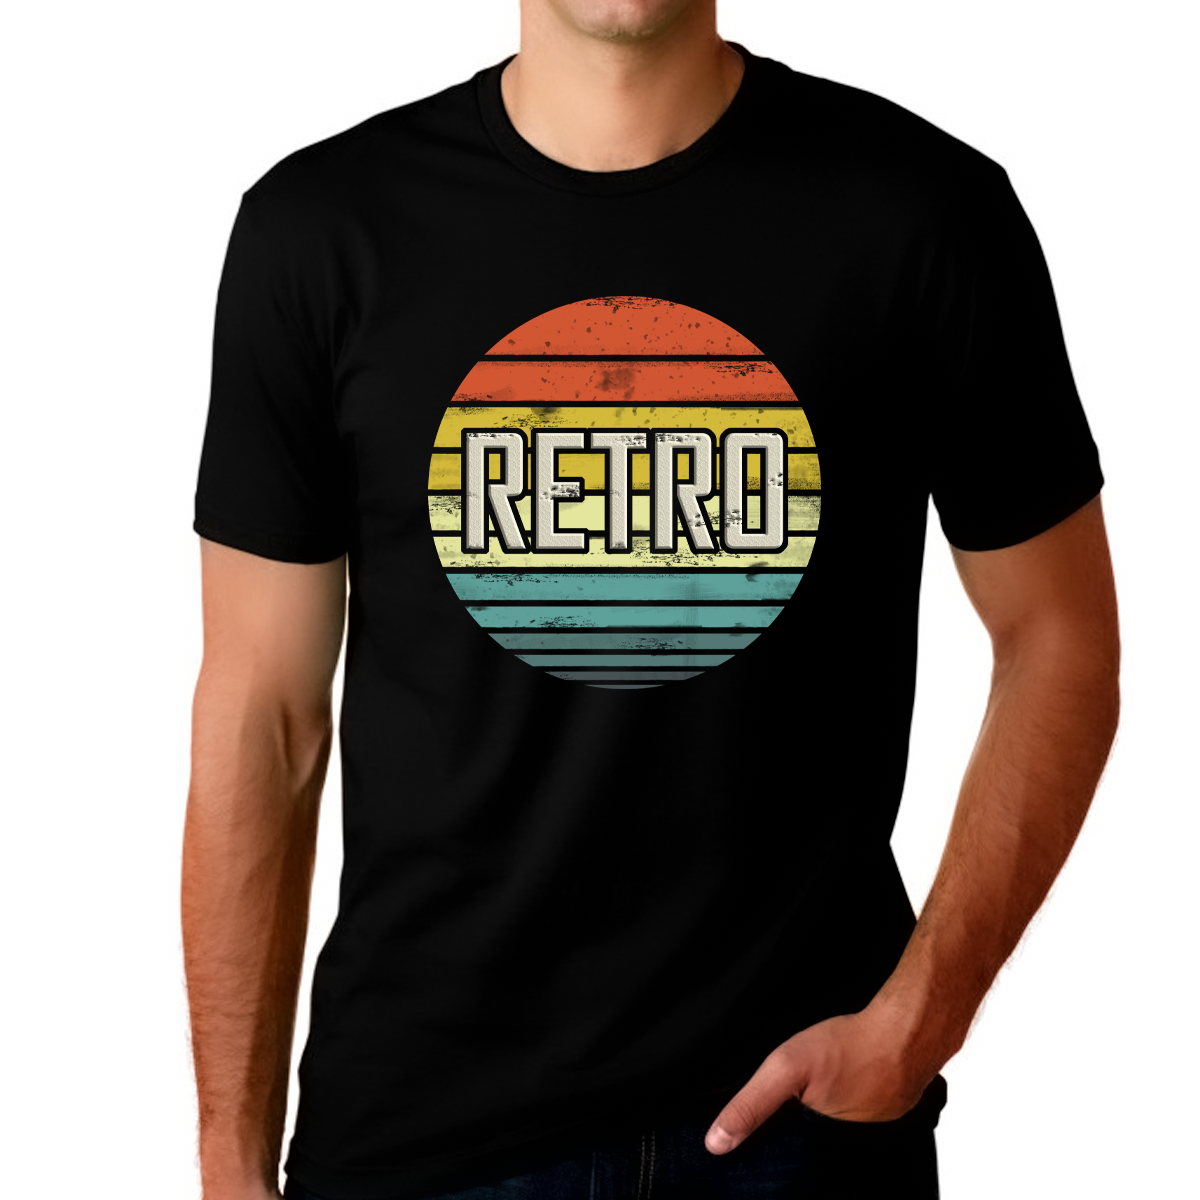 Retro Vintage Tees for Men - Vintage Clothes Vintage T Shirts Retro Shirts Graphic Tees Vintage - Fire Fit Designs